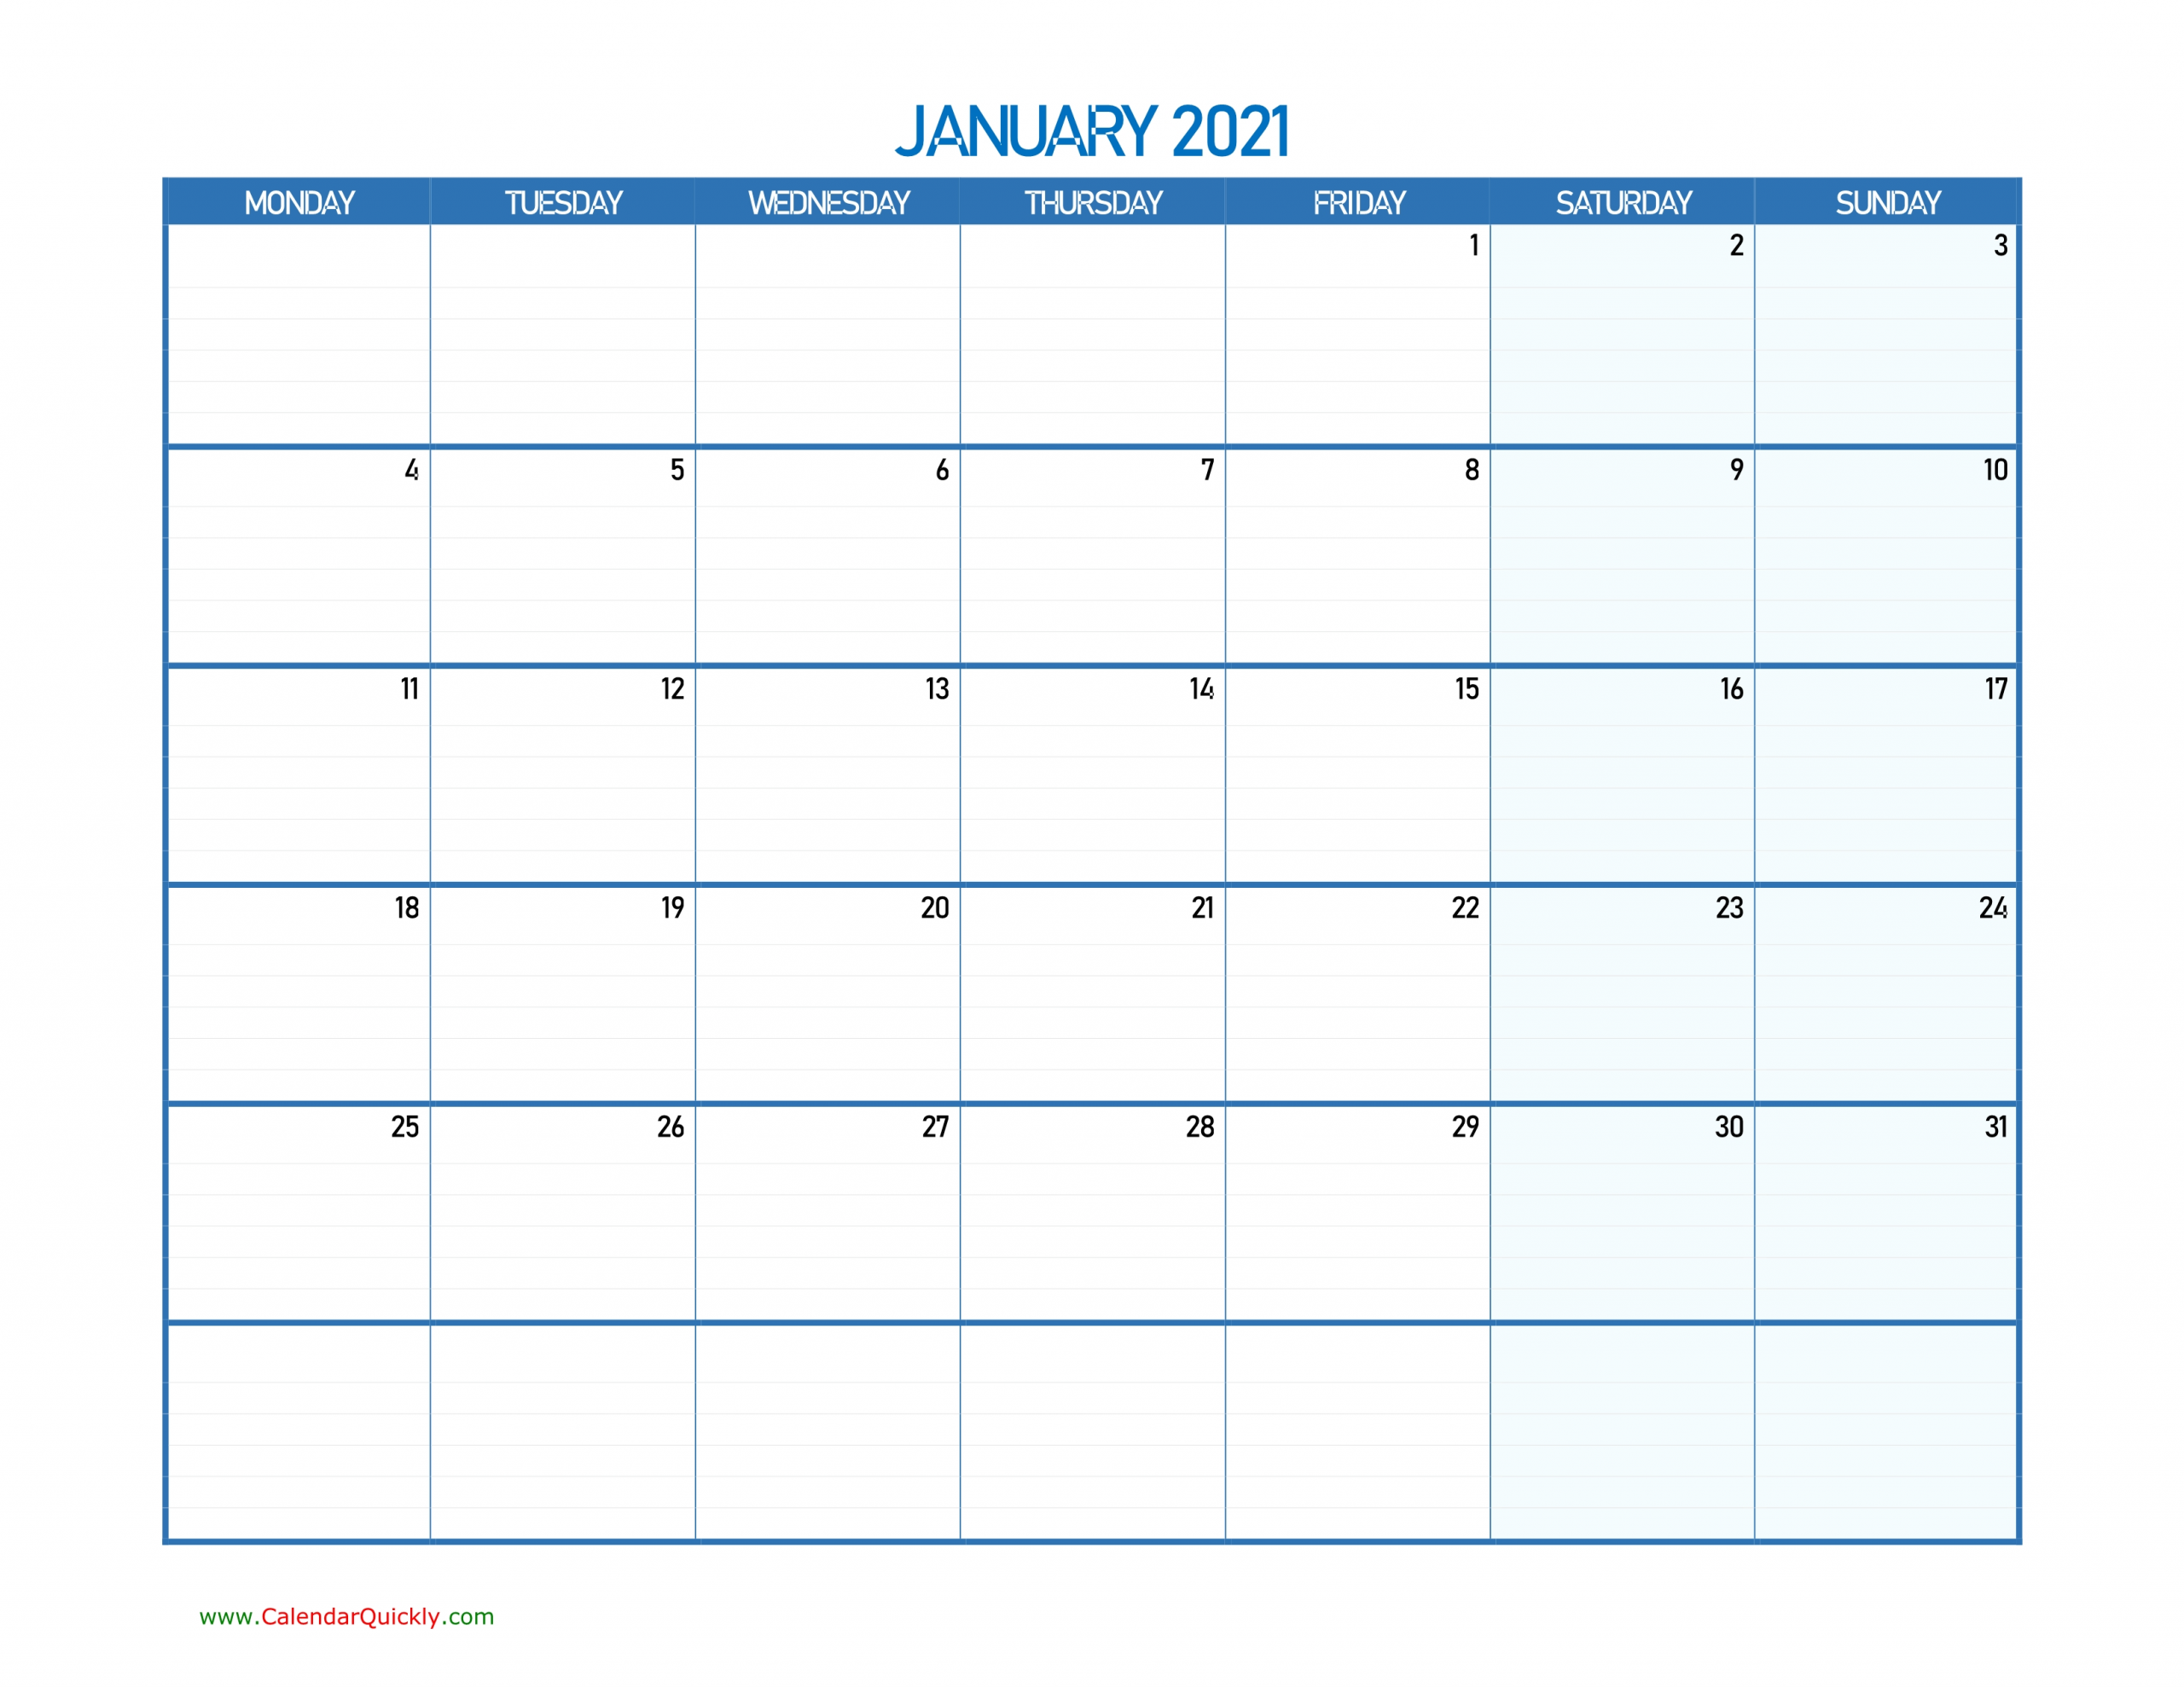 Monthly Monday 2021 Blank Calendar | Calendar Quickly